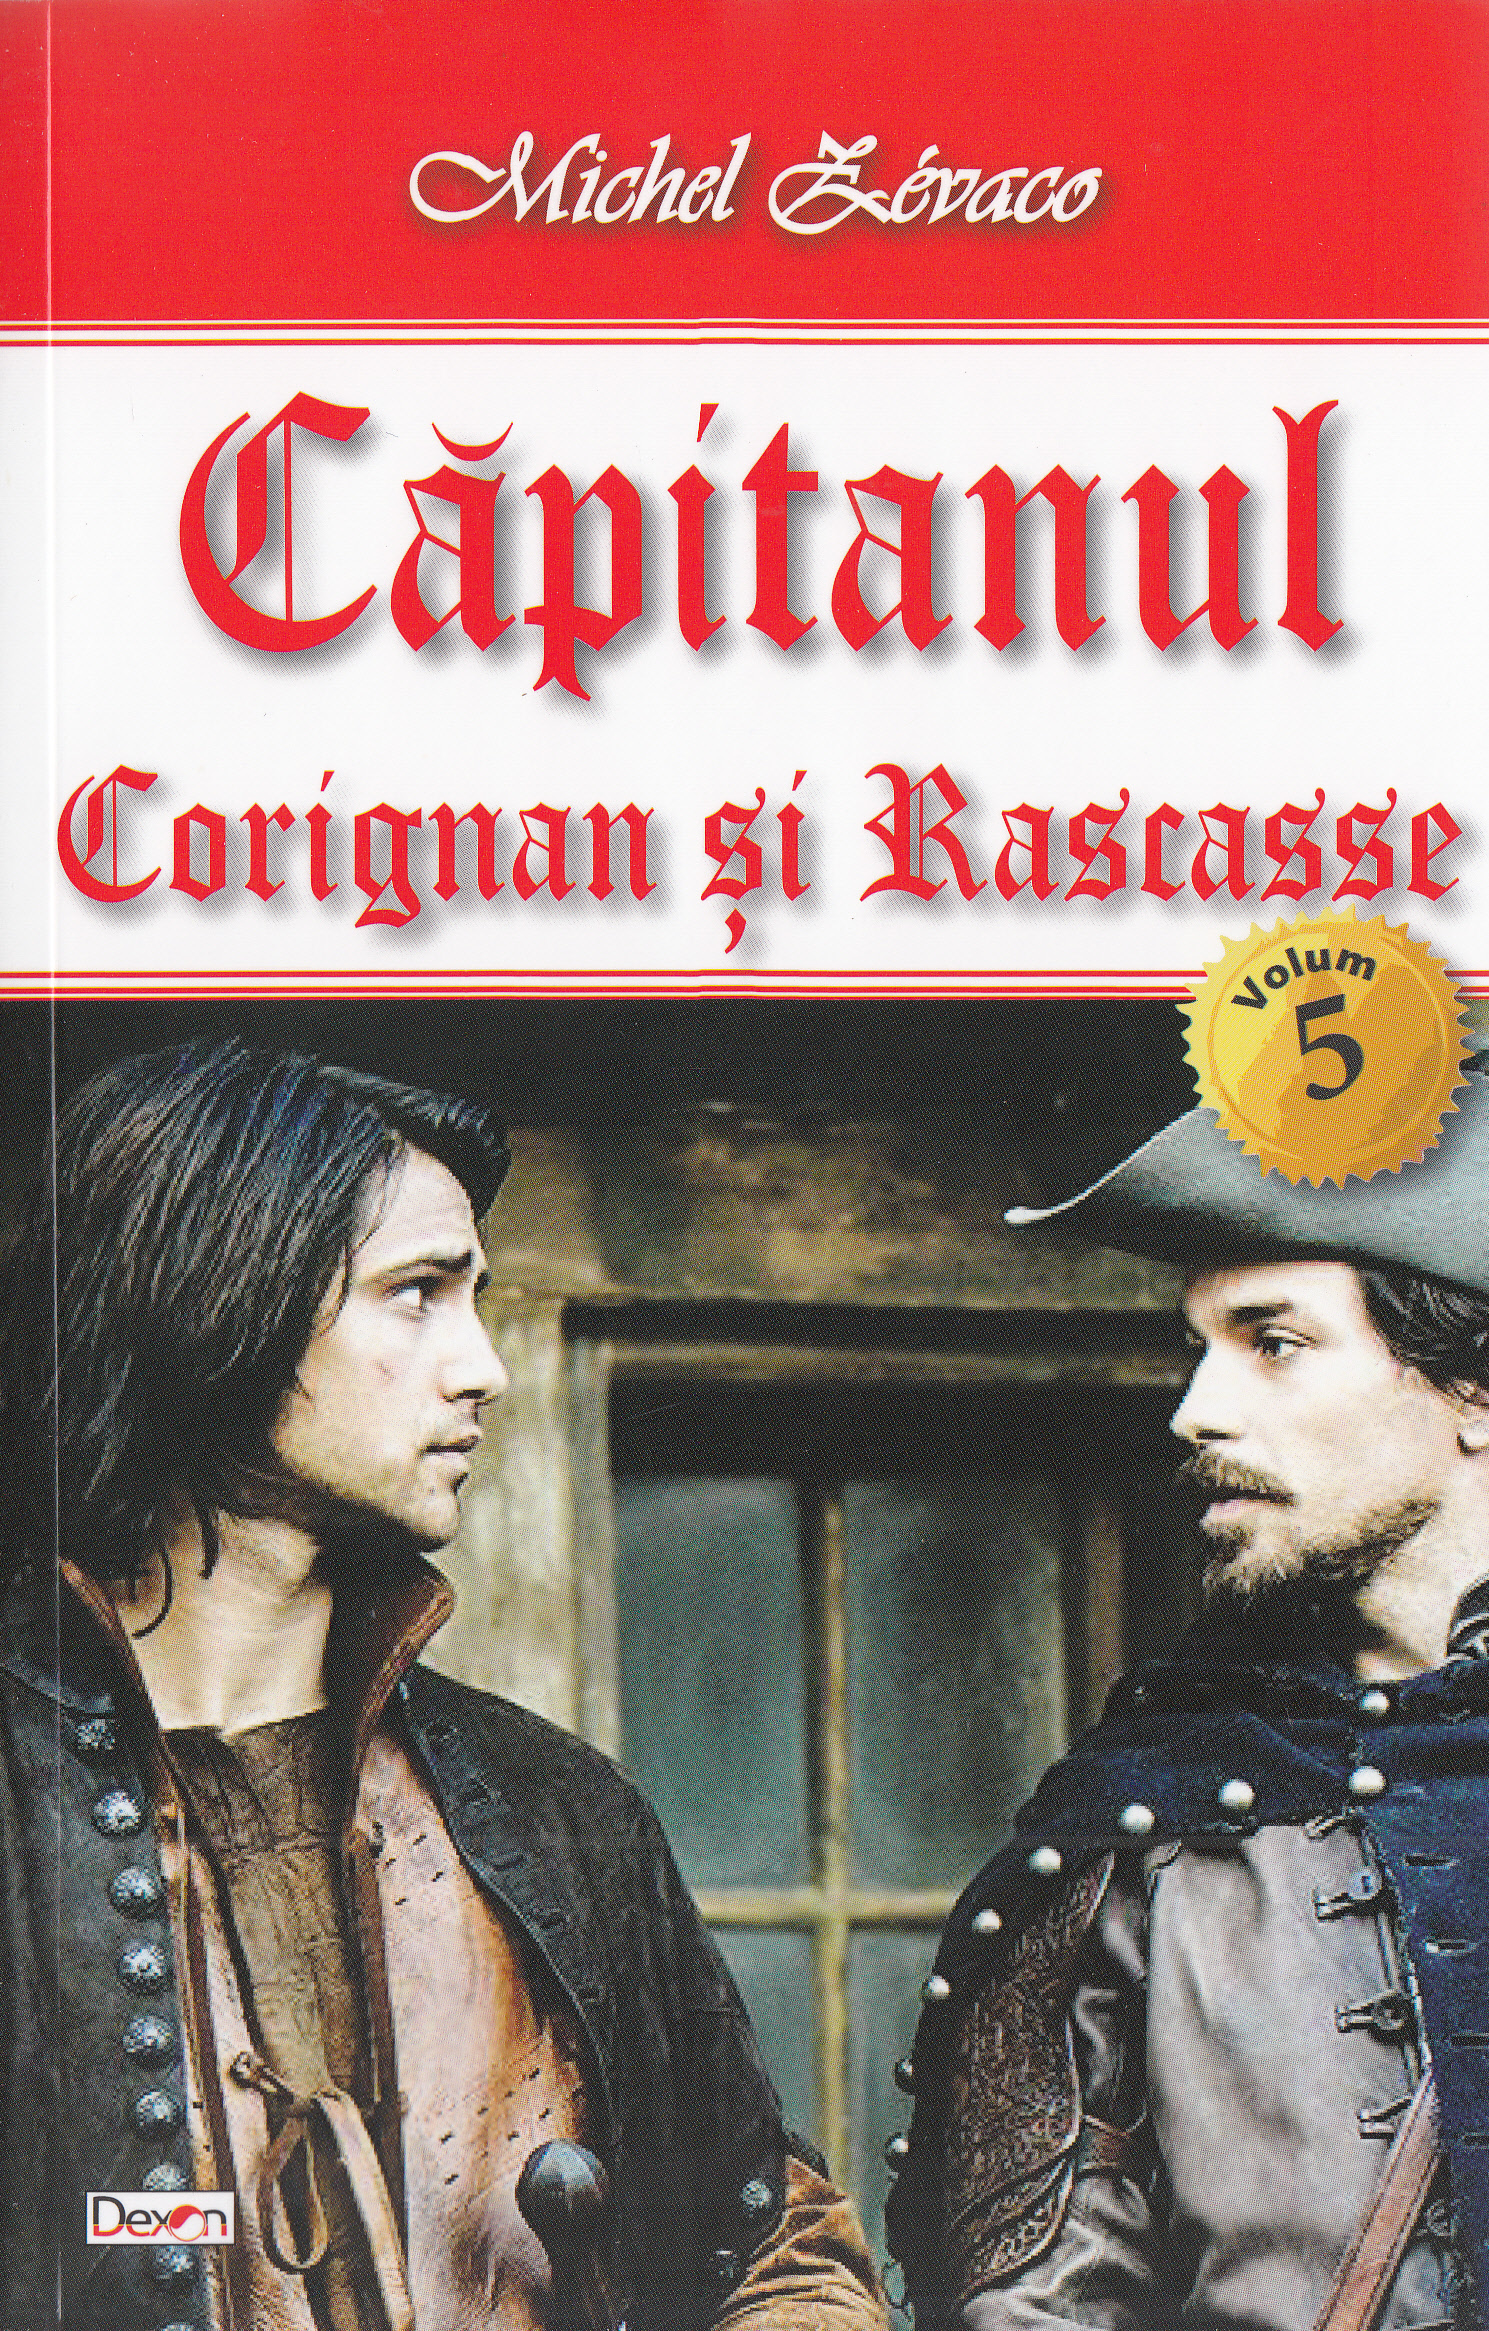 Capitanul Vol. 5: Corignan si Rascasse - Michel Zevaco